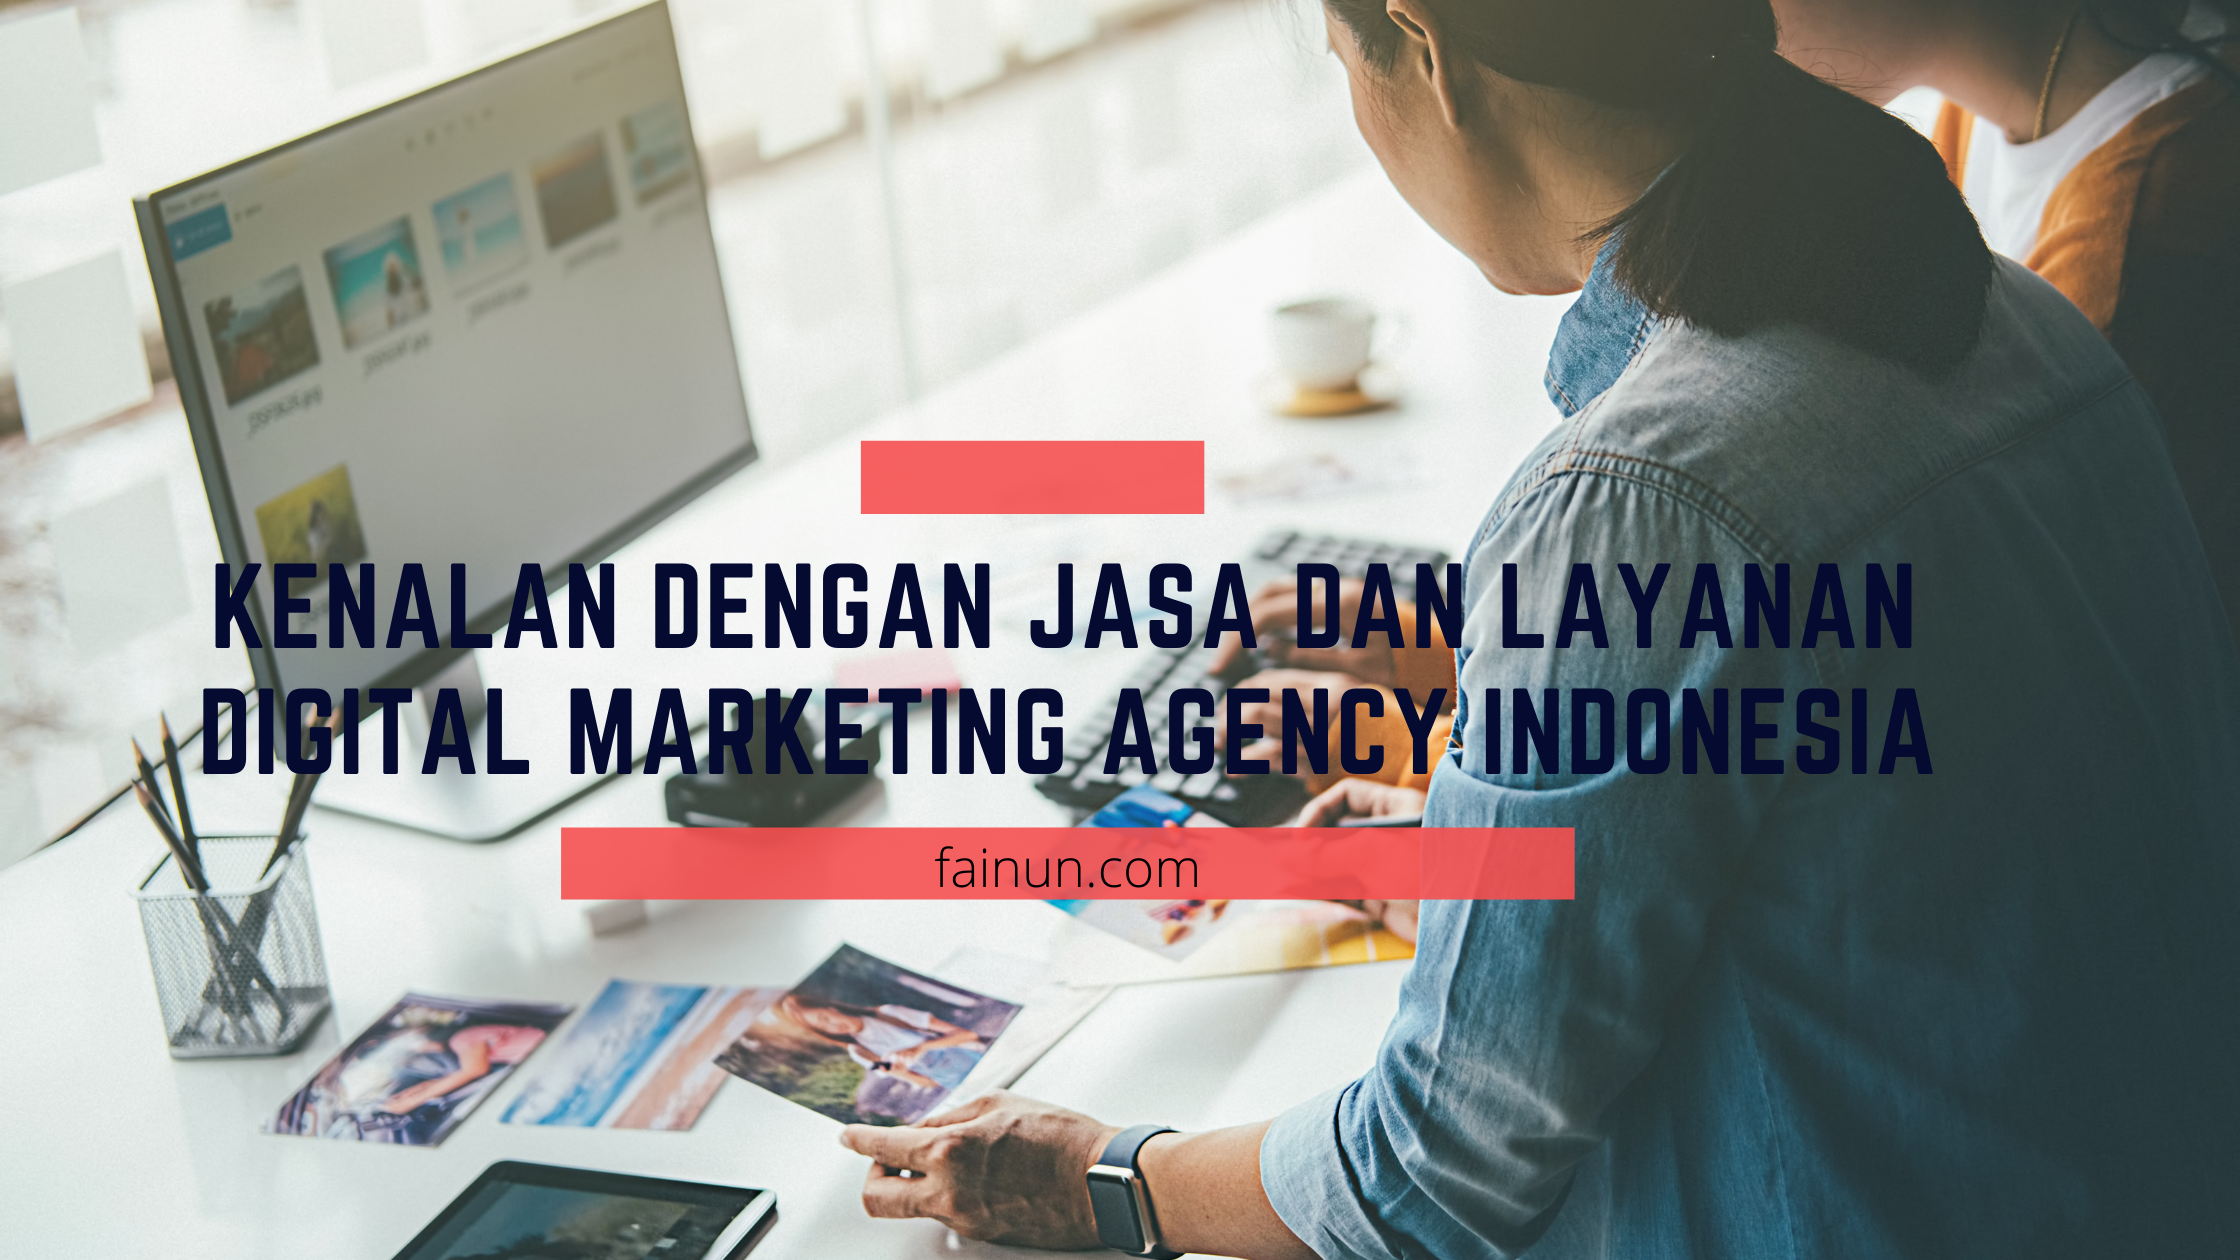 Digital Marketing Agency Indonesia